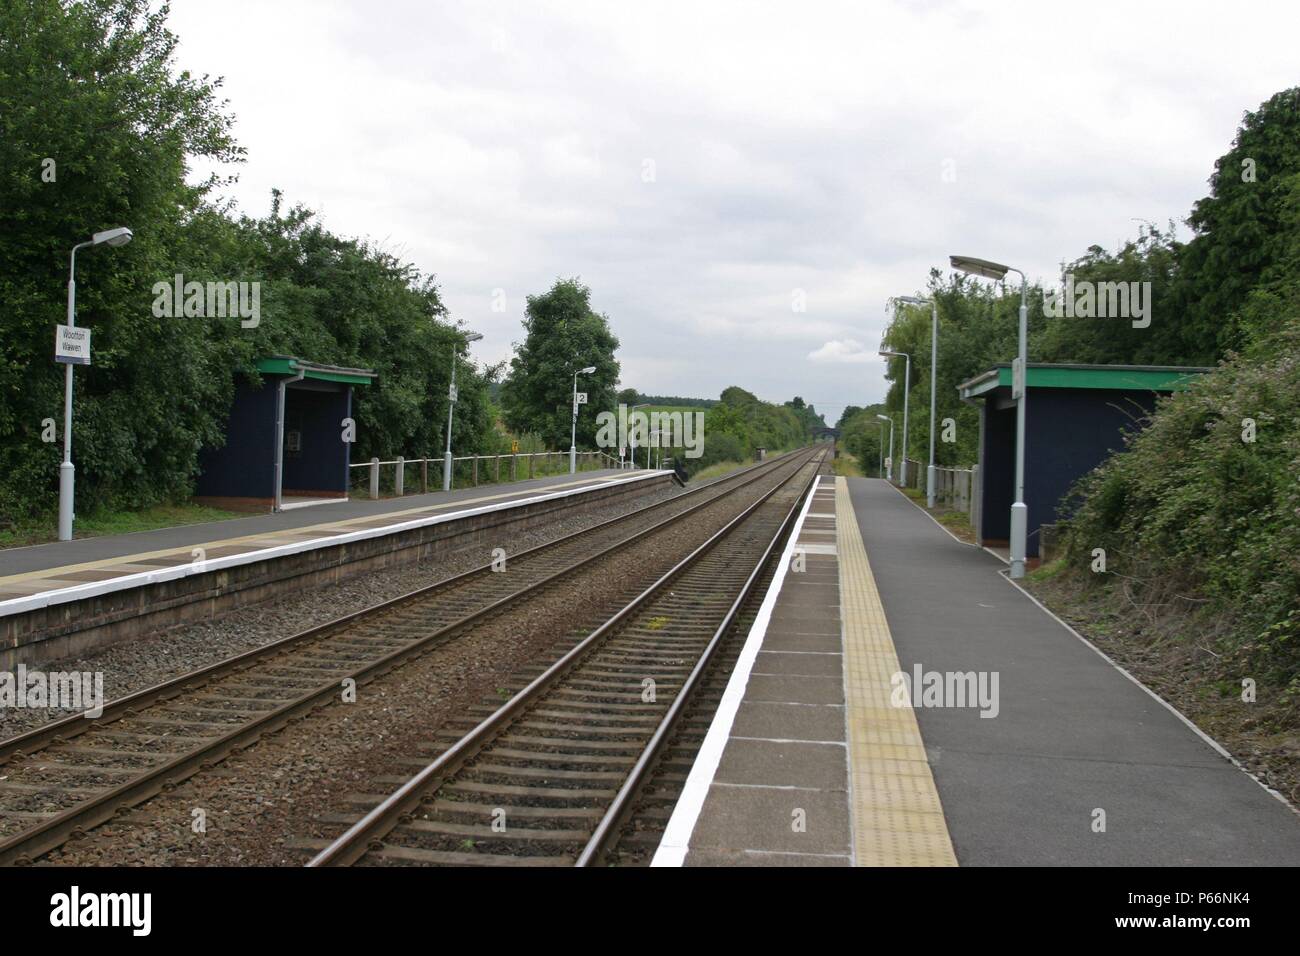 General platform view at Wooton Wawen station, Warwickshire, showing platform lighting and waiting shelters. 2007 Stock Photo